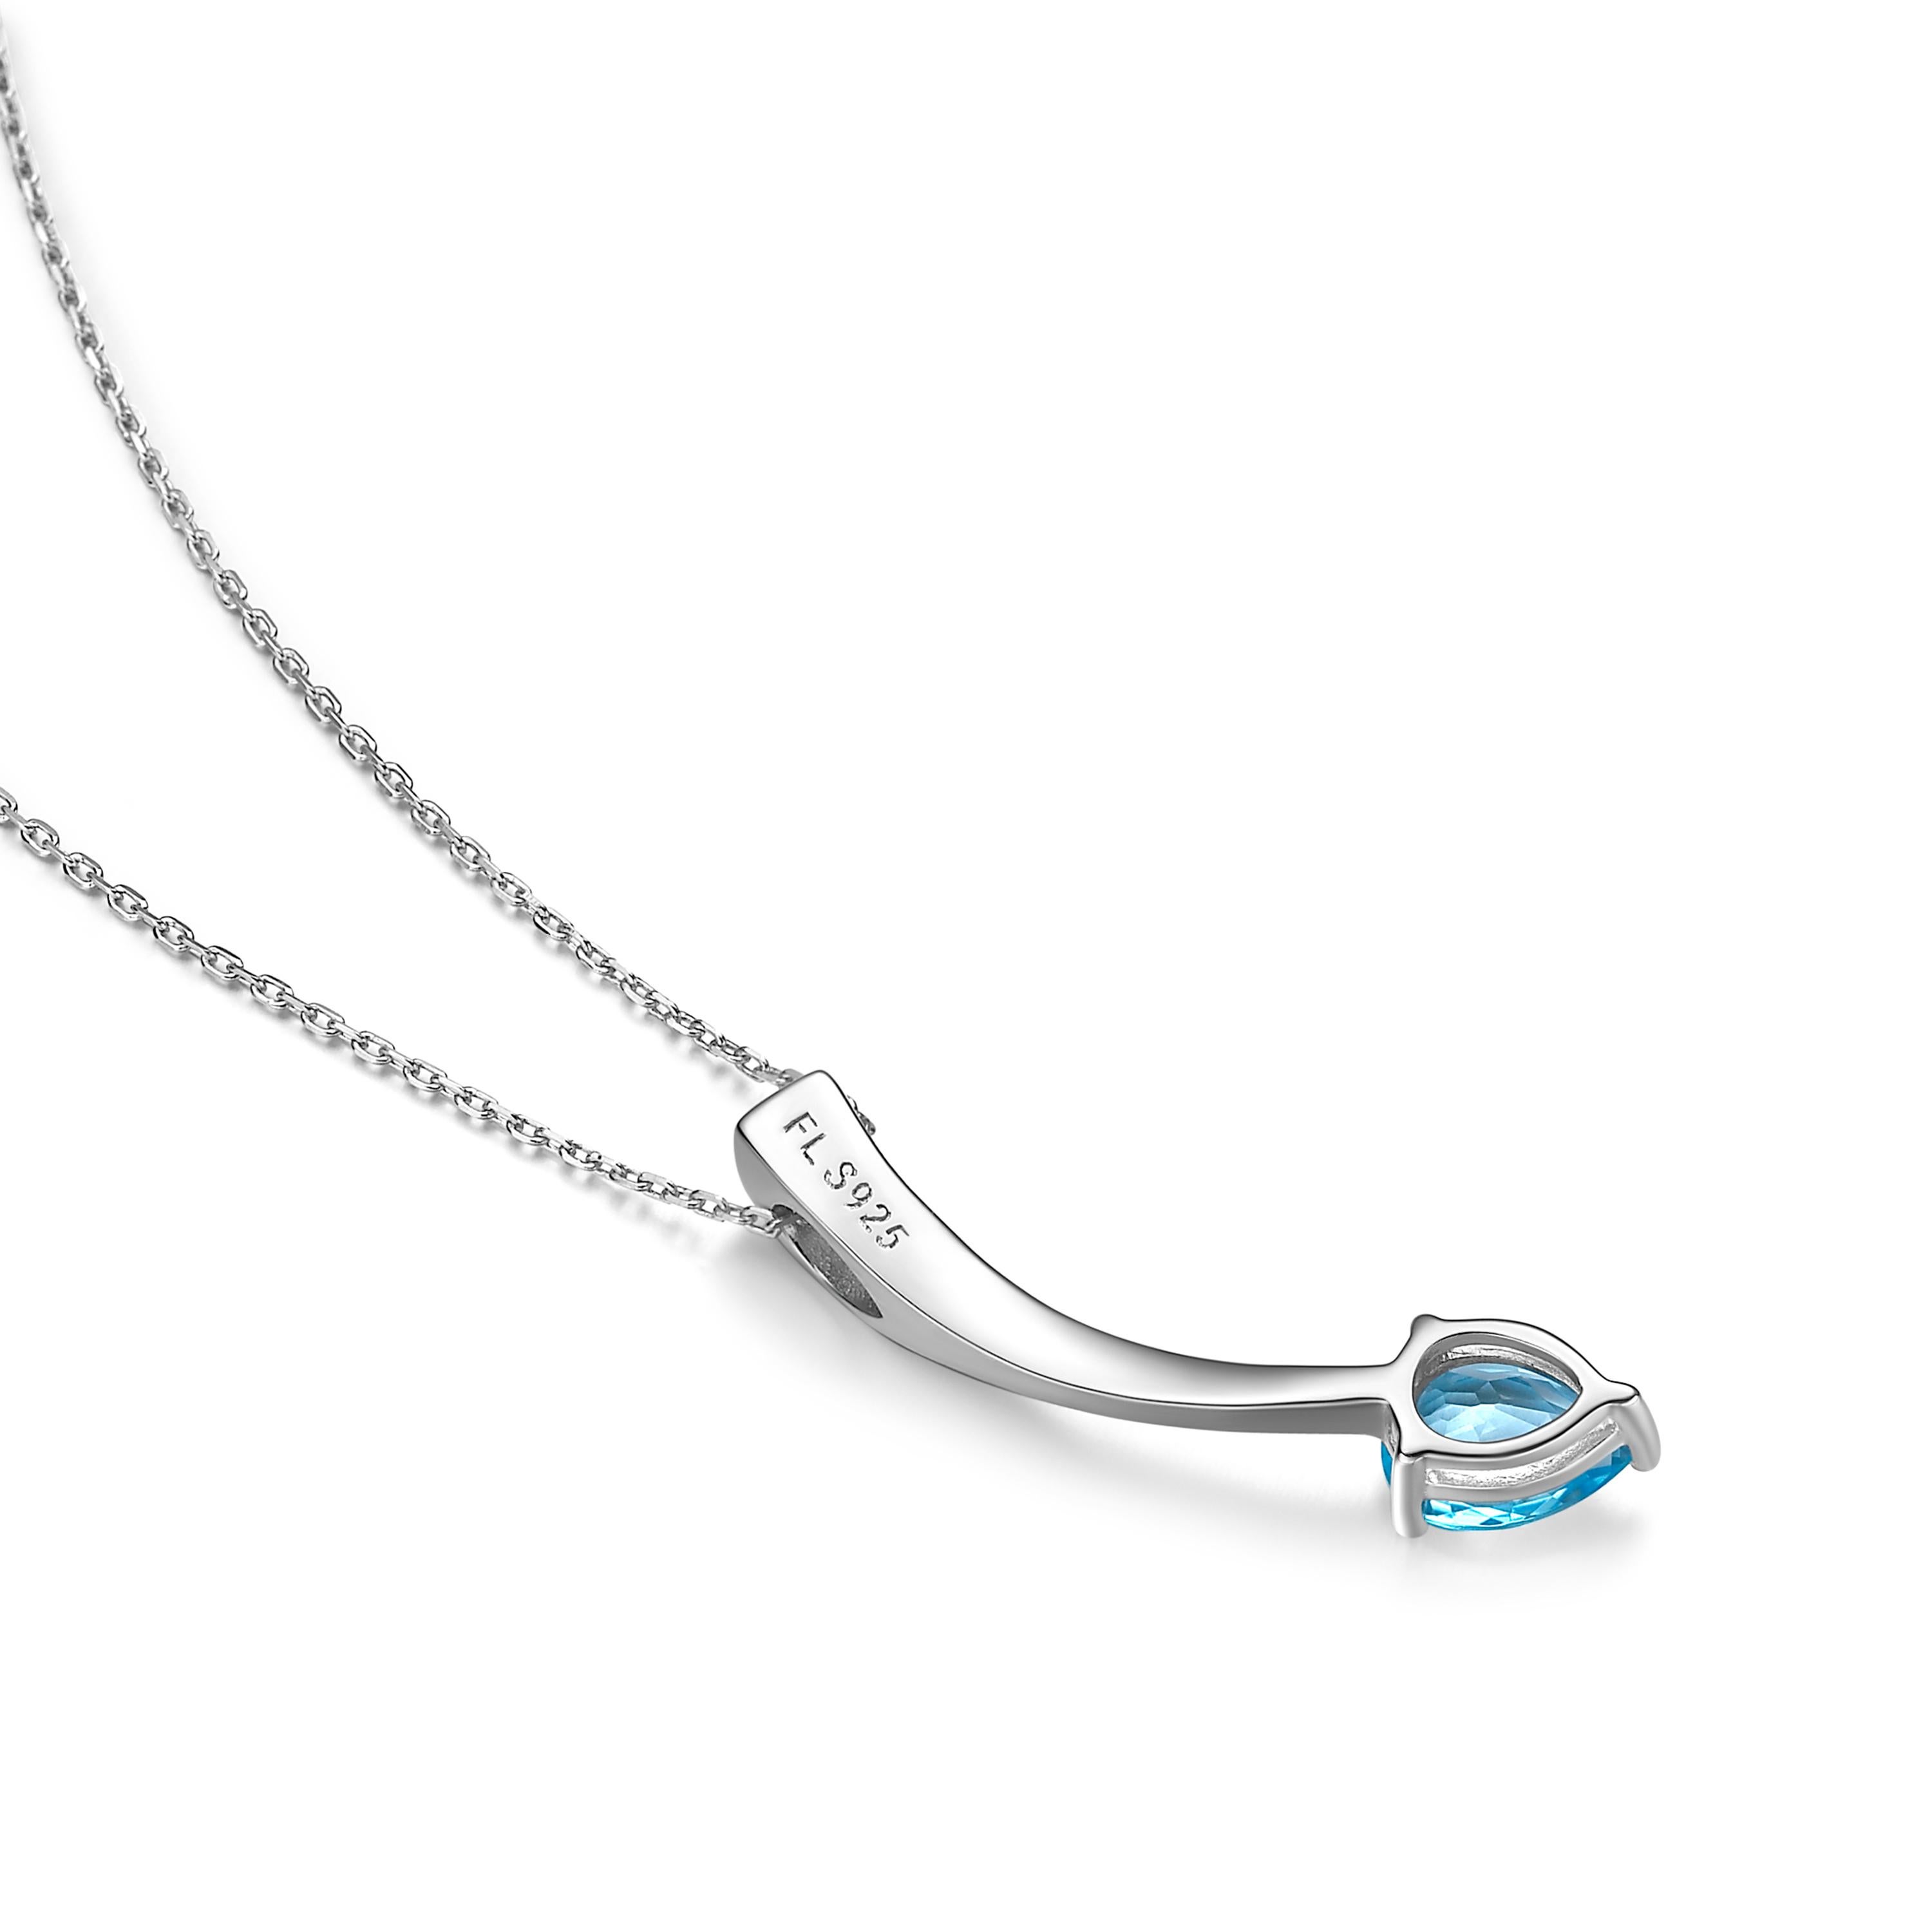 Contemporary Fei Liu Pear Cut Blue Topaz Cubic Zirconia Sterling Silver Pendant Necklace